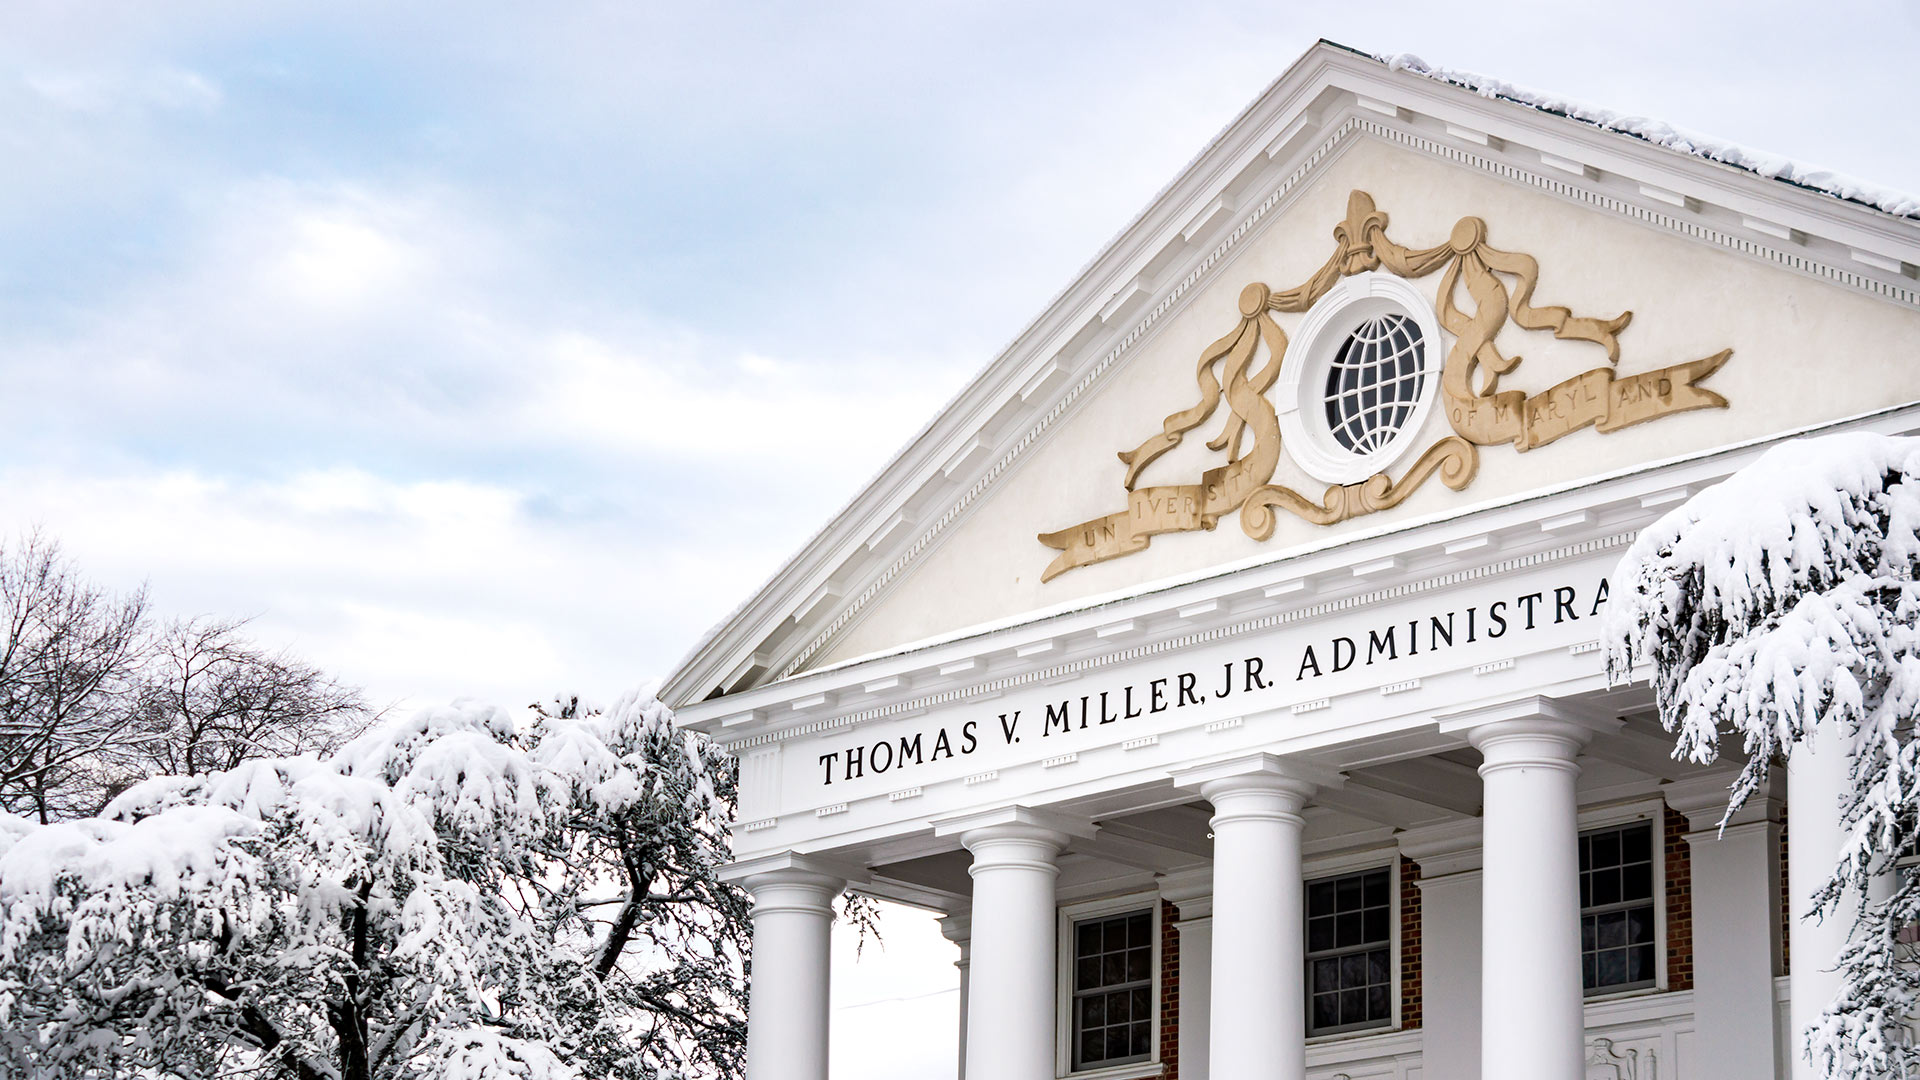 Thomas V. Miller Jr. Administration Building covered in snow